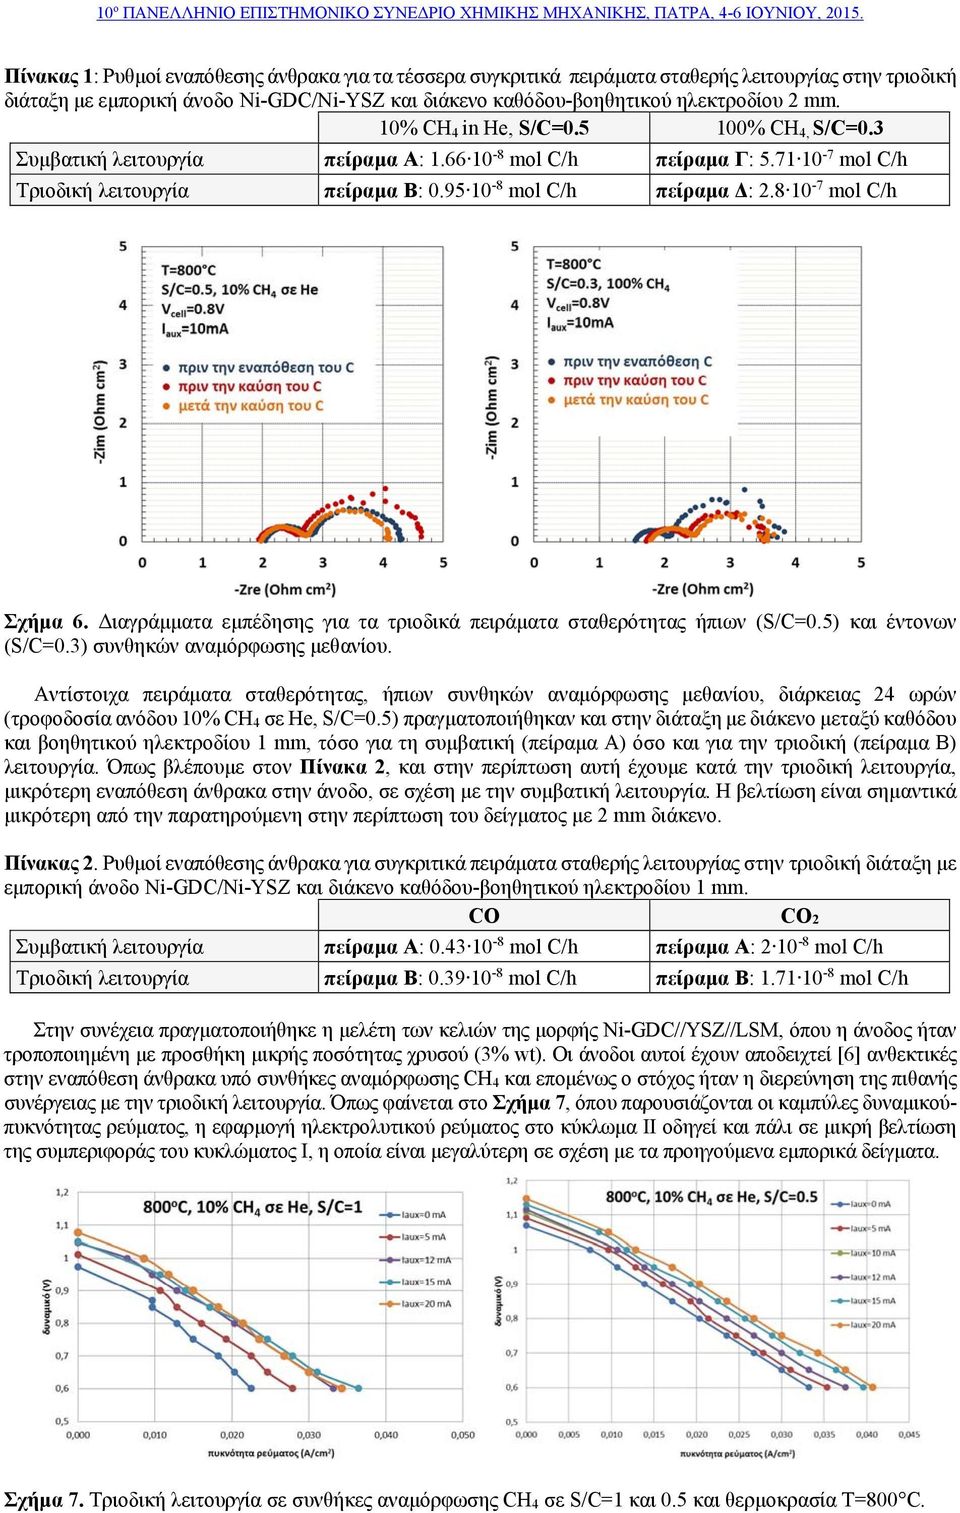 8 10-7 mol C/h Σχήμα 6. Διαγράμματα εμπέδησης για τα τριοδικά πειράματα σταθερότητας ήπιων (S/C=0.5) και έντονων (S/C=0.3) συνθηκών αναμόρφωσης μεθανίου.